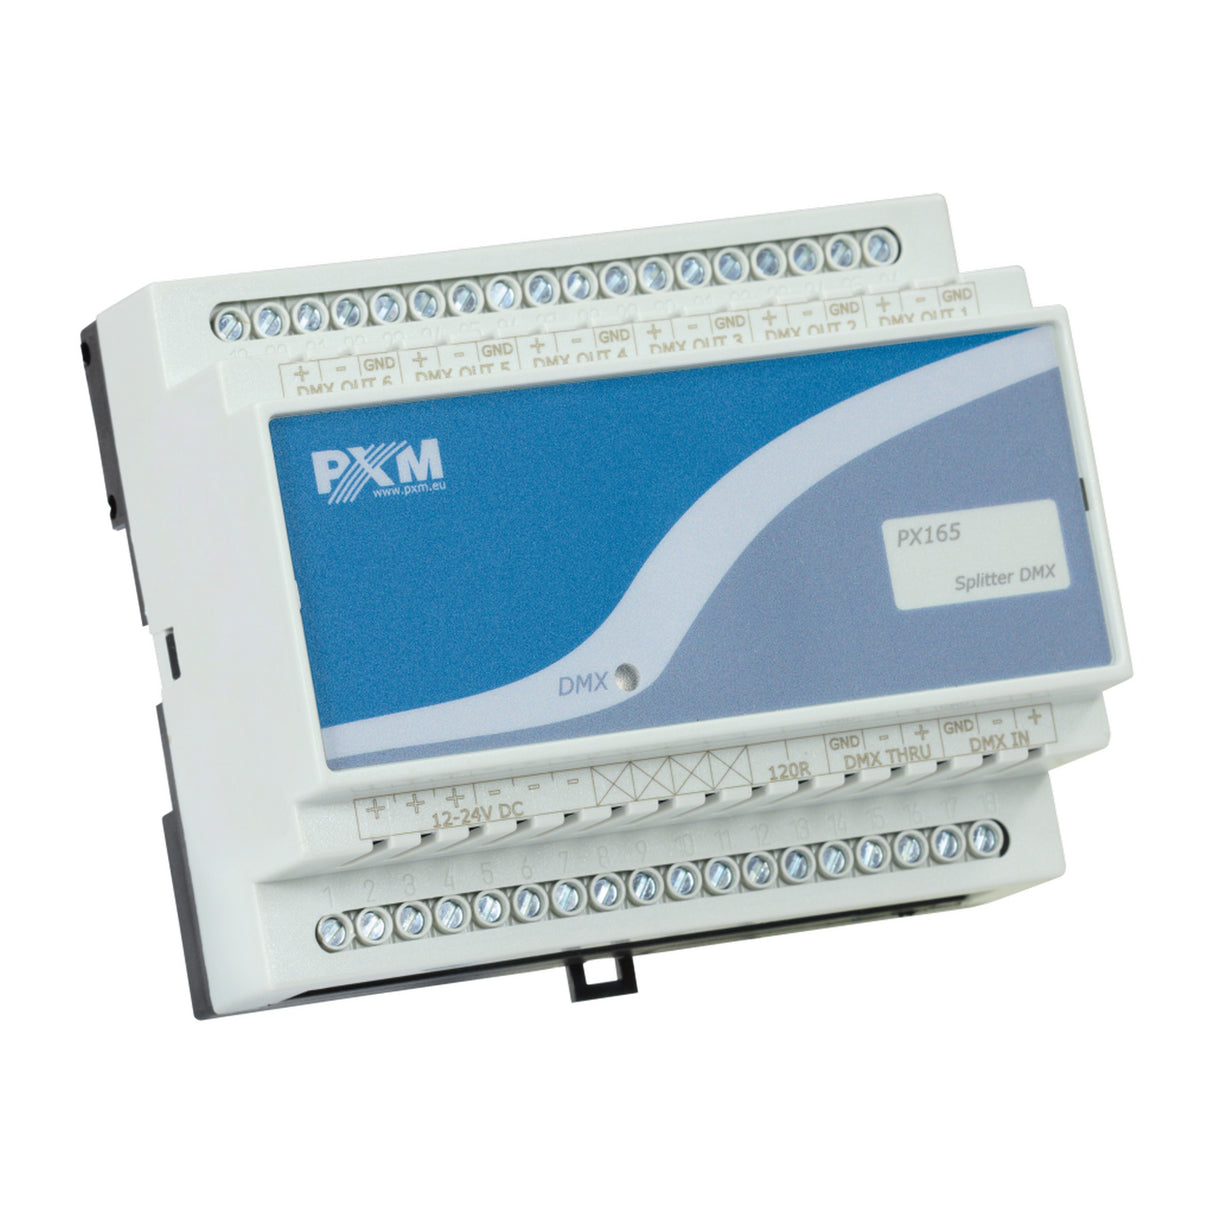 PXM PX165 6-Output DIN T35 DMX Signal Splitter